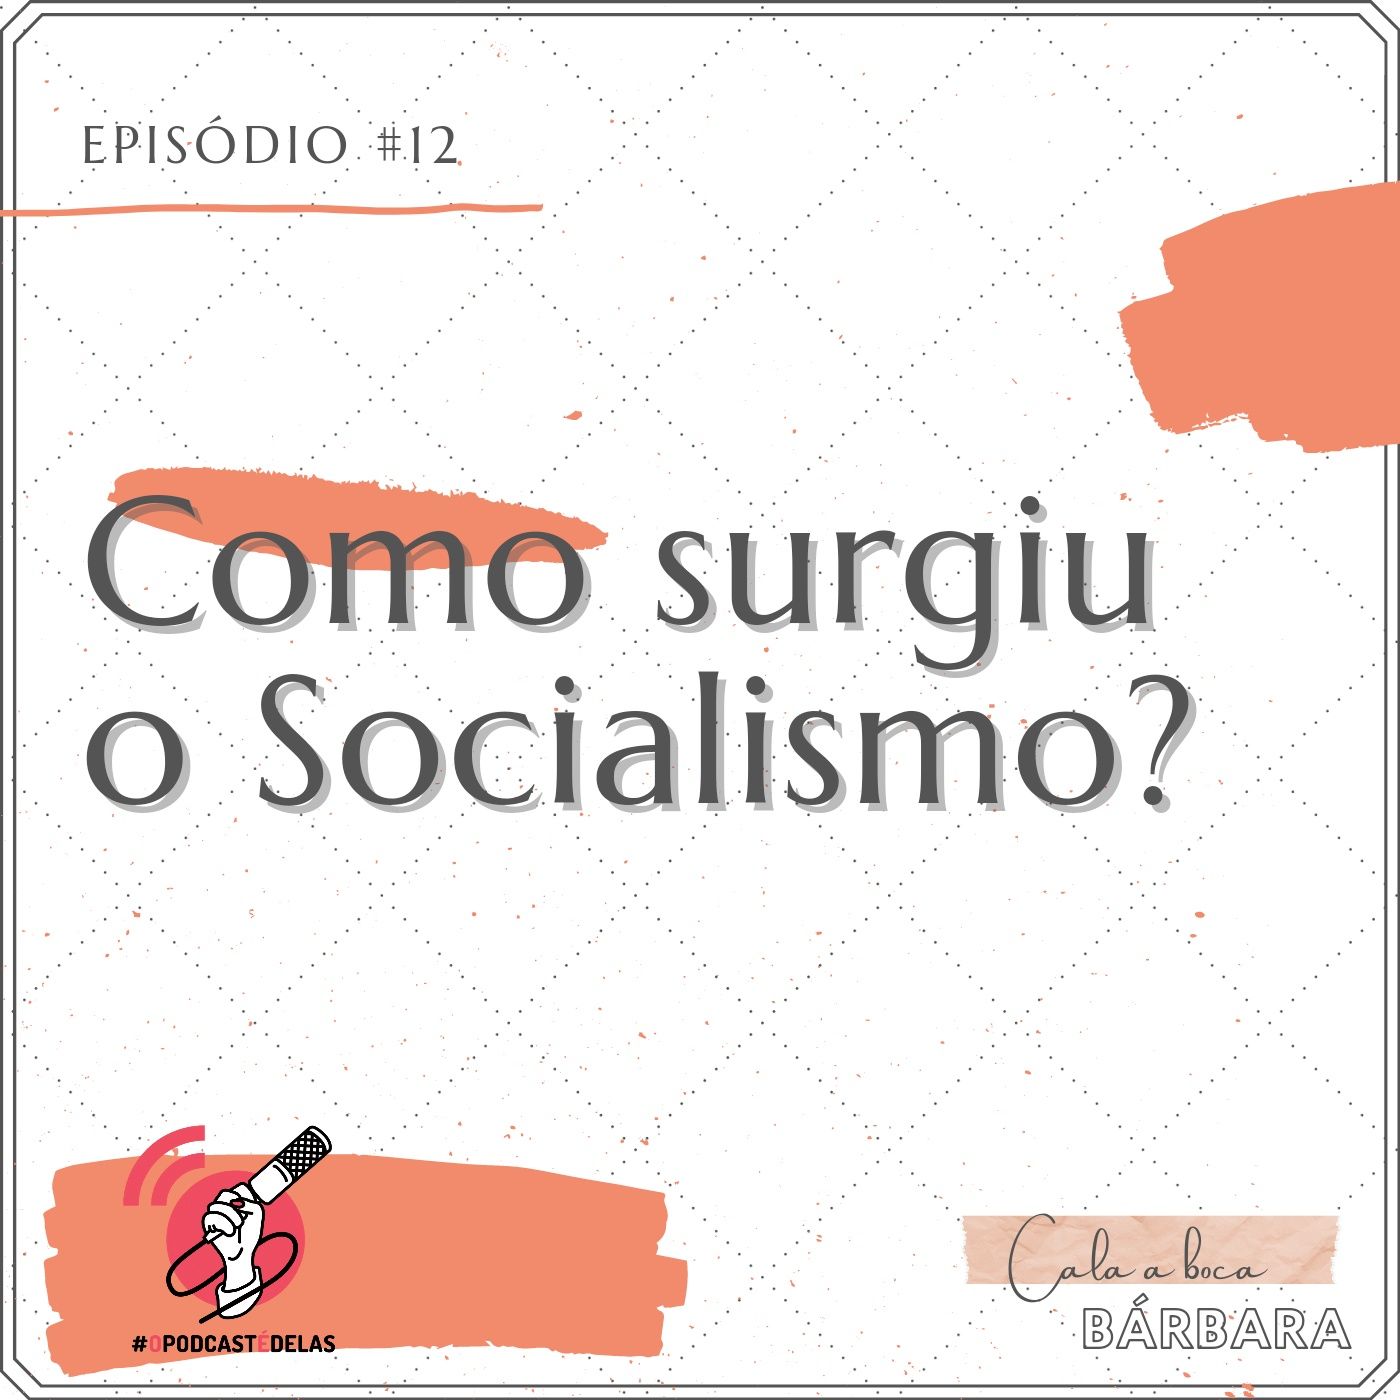 Cala a boca, Bárbara #12 – Como surgiu o Socialismo?